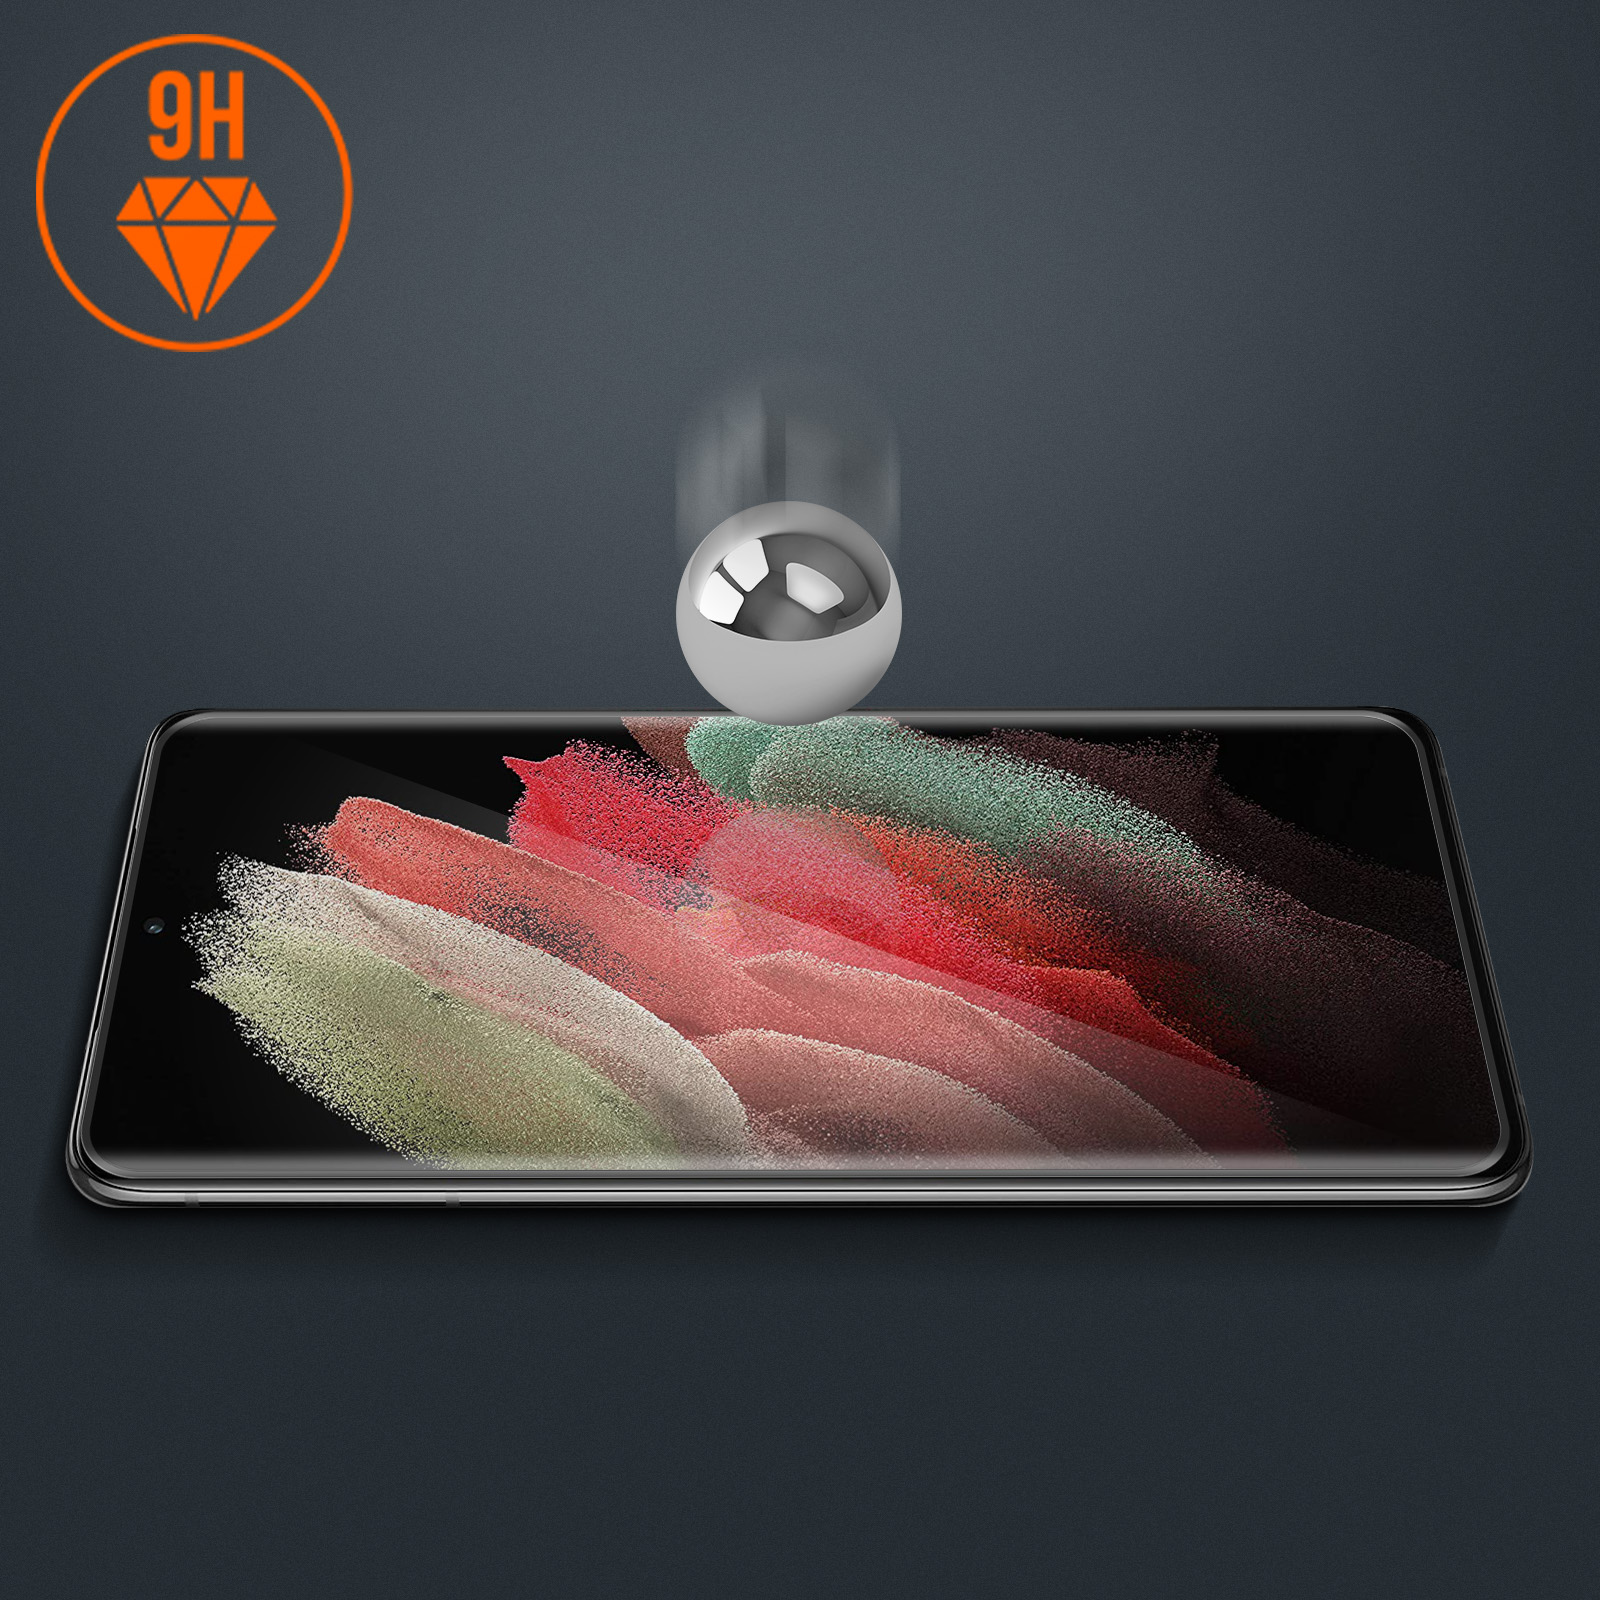 Film verre trempé 4D Noir compatible Samsung Galaxy S21 Ultra